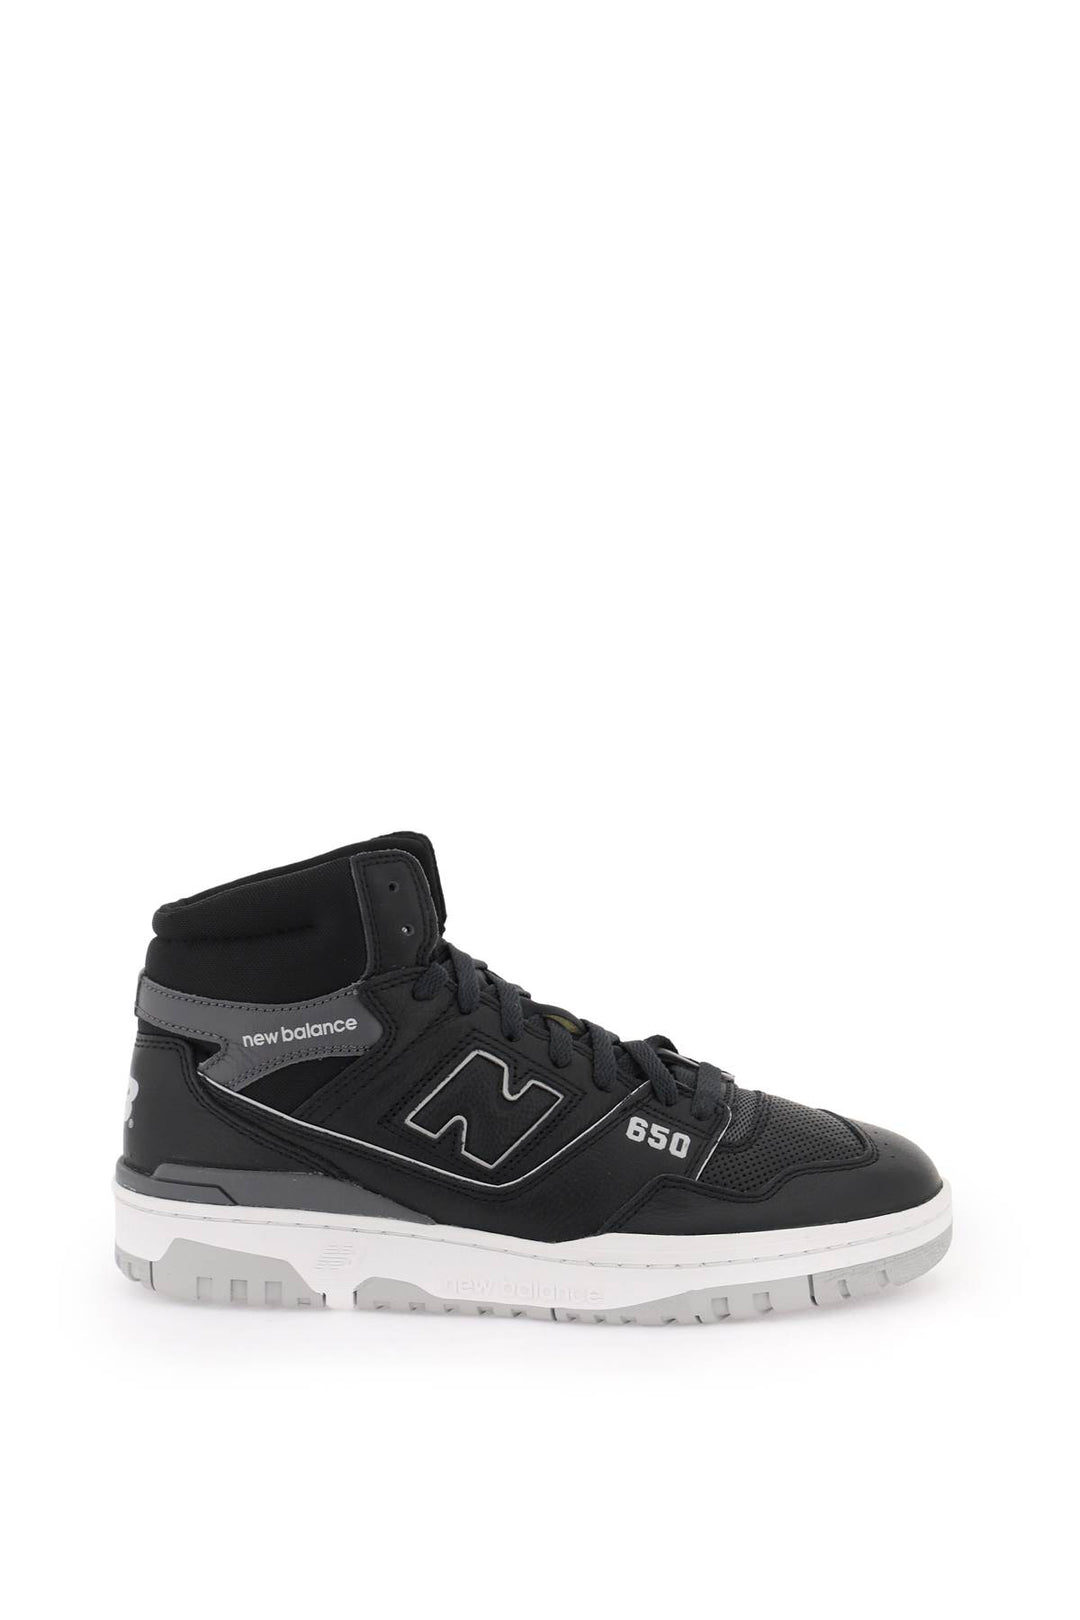 New Balance 650 Sneakers   Nero